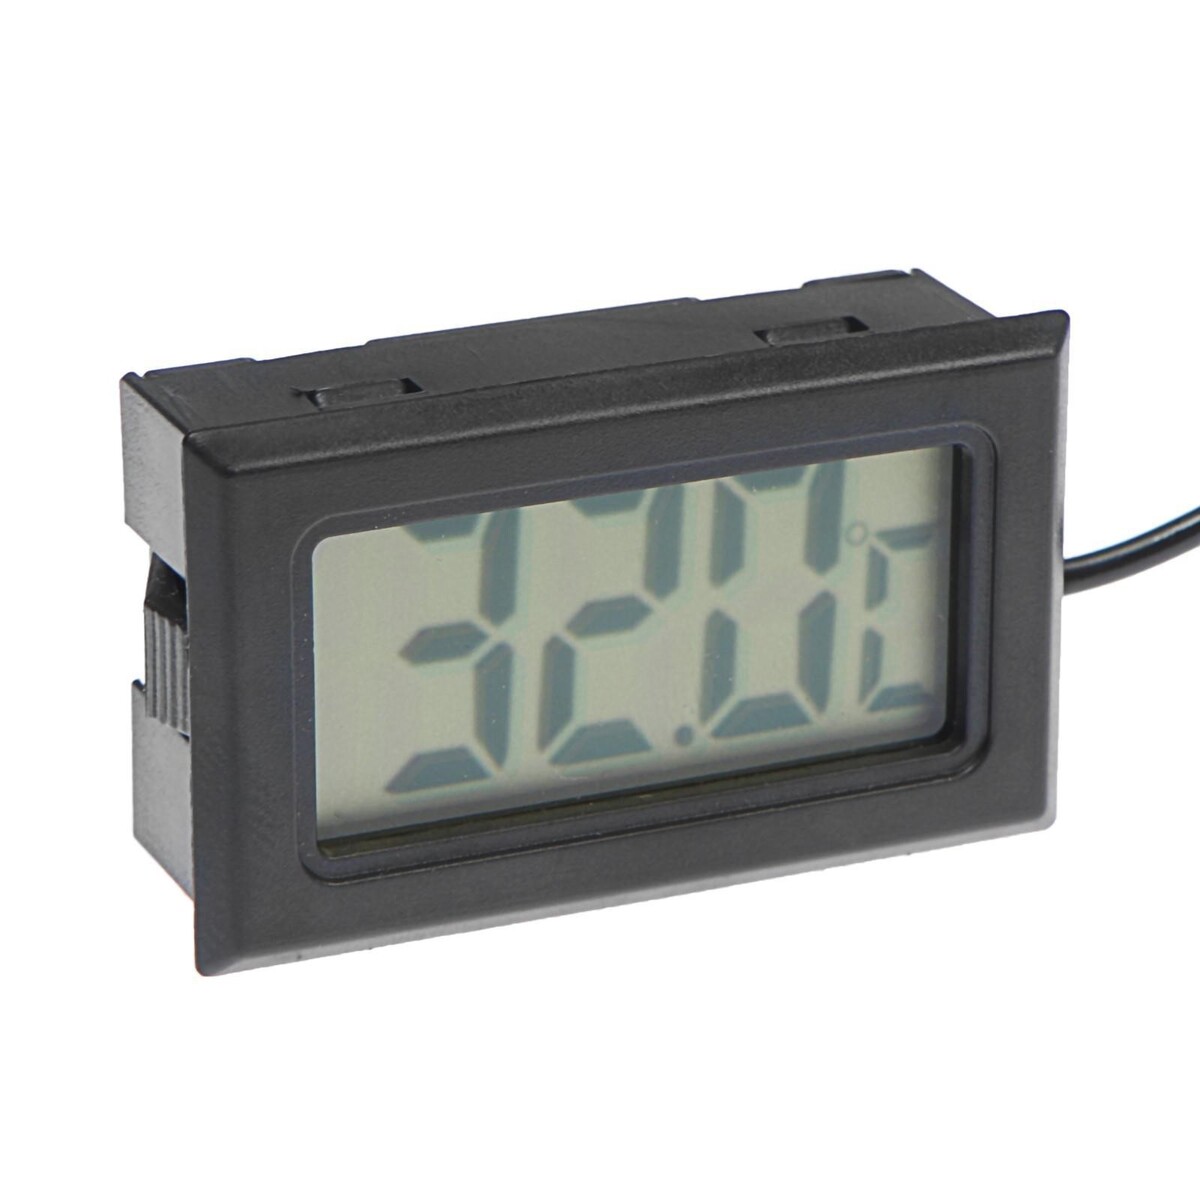 Термометр цифровой, жк-экран, провод 1 м rst цифровой оконный термометр на липучке rst01077